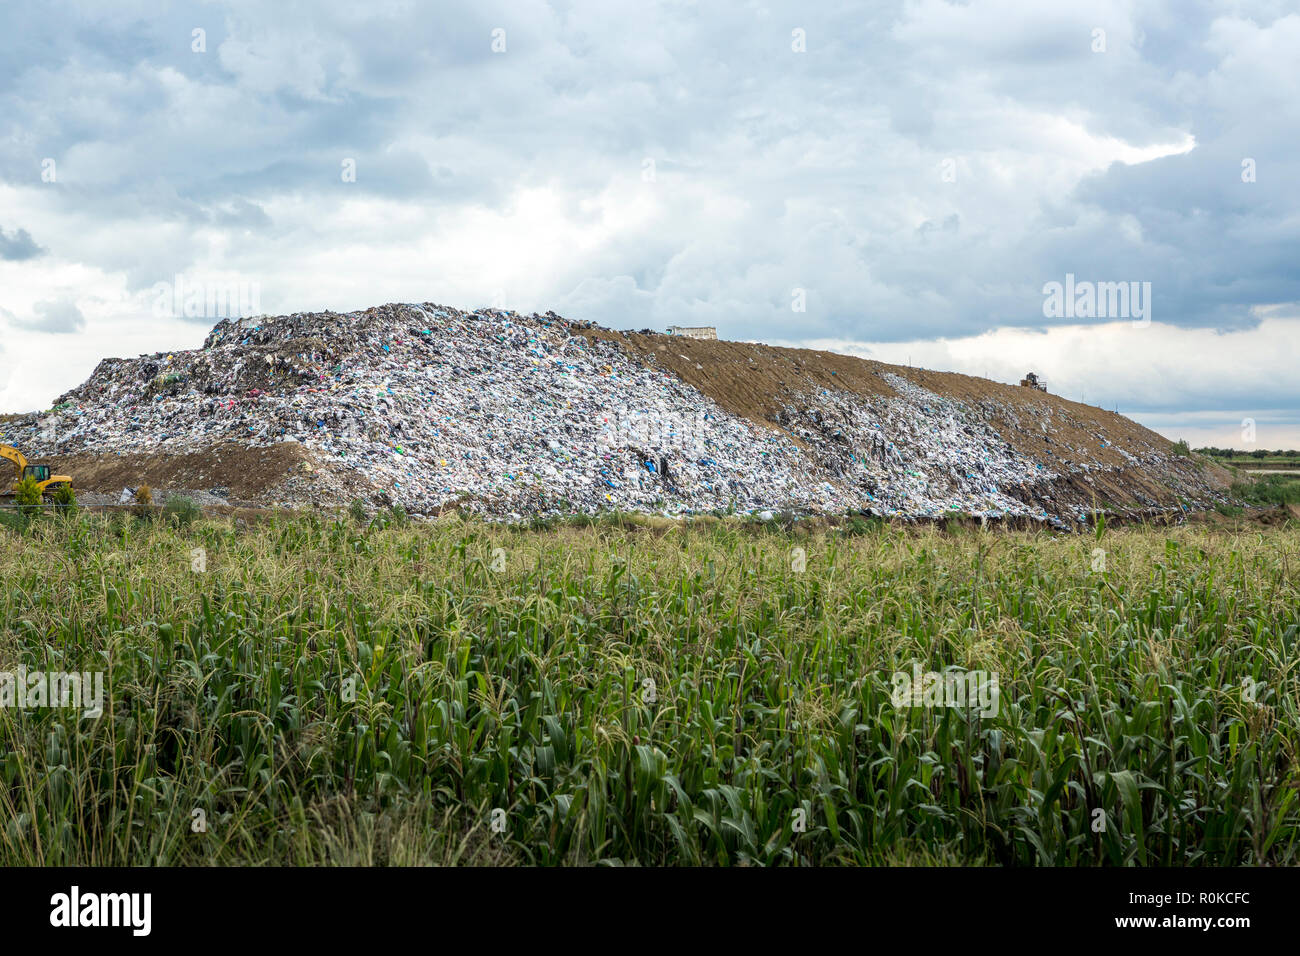 Waste disposal site next to cornfield, Cholula, Puebla, Mexico Stock Photo